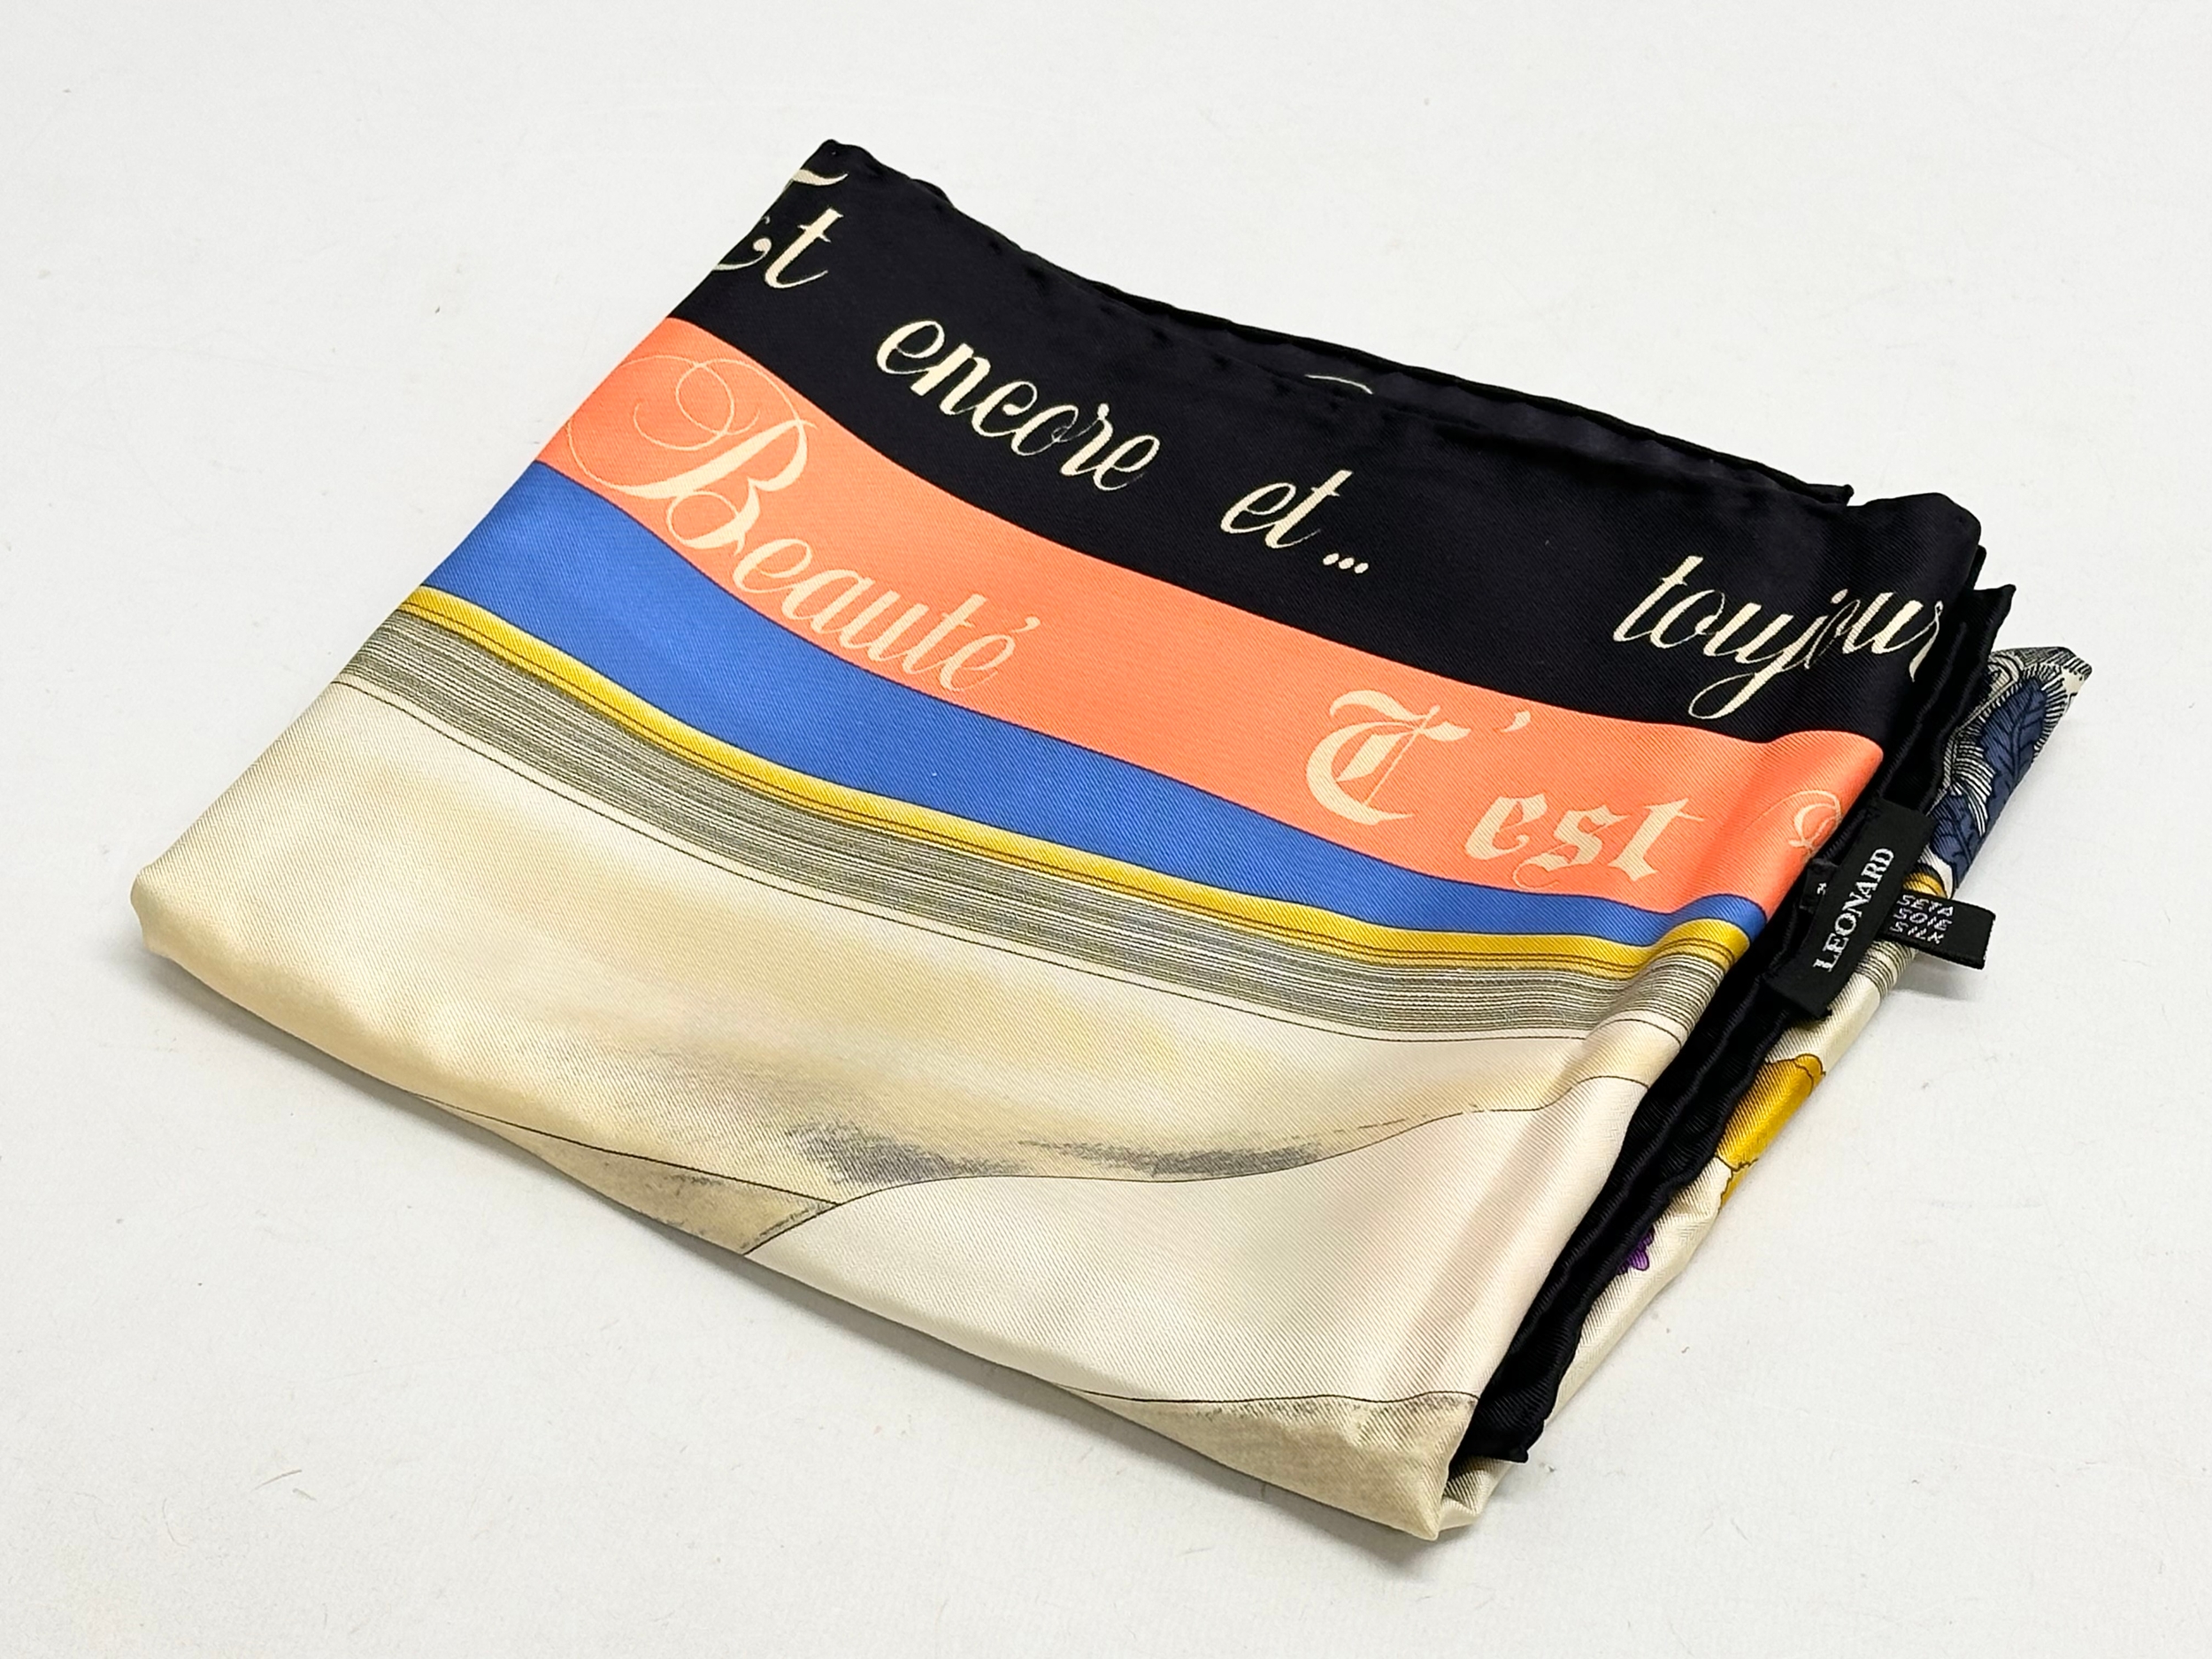 A Leonard silk scarf.